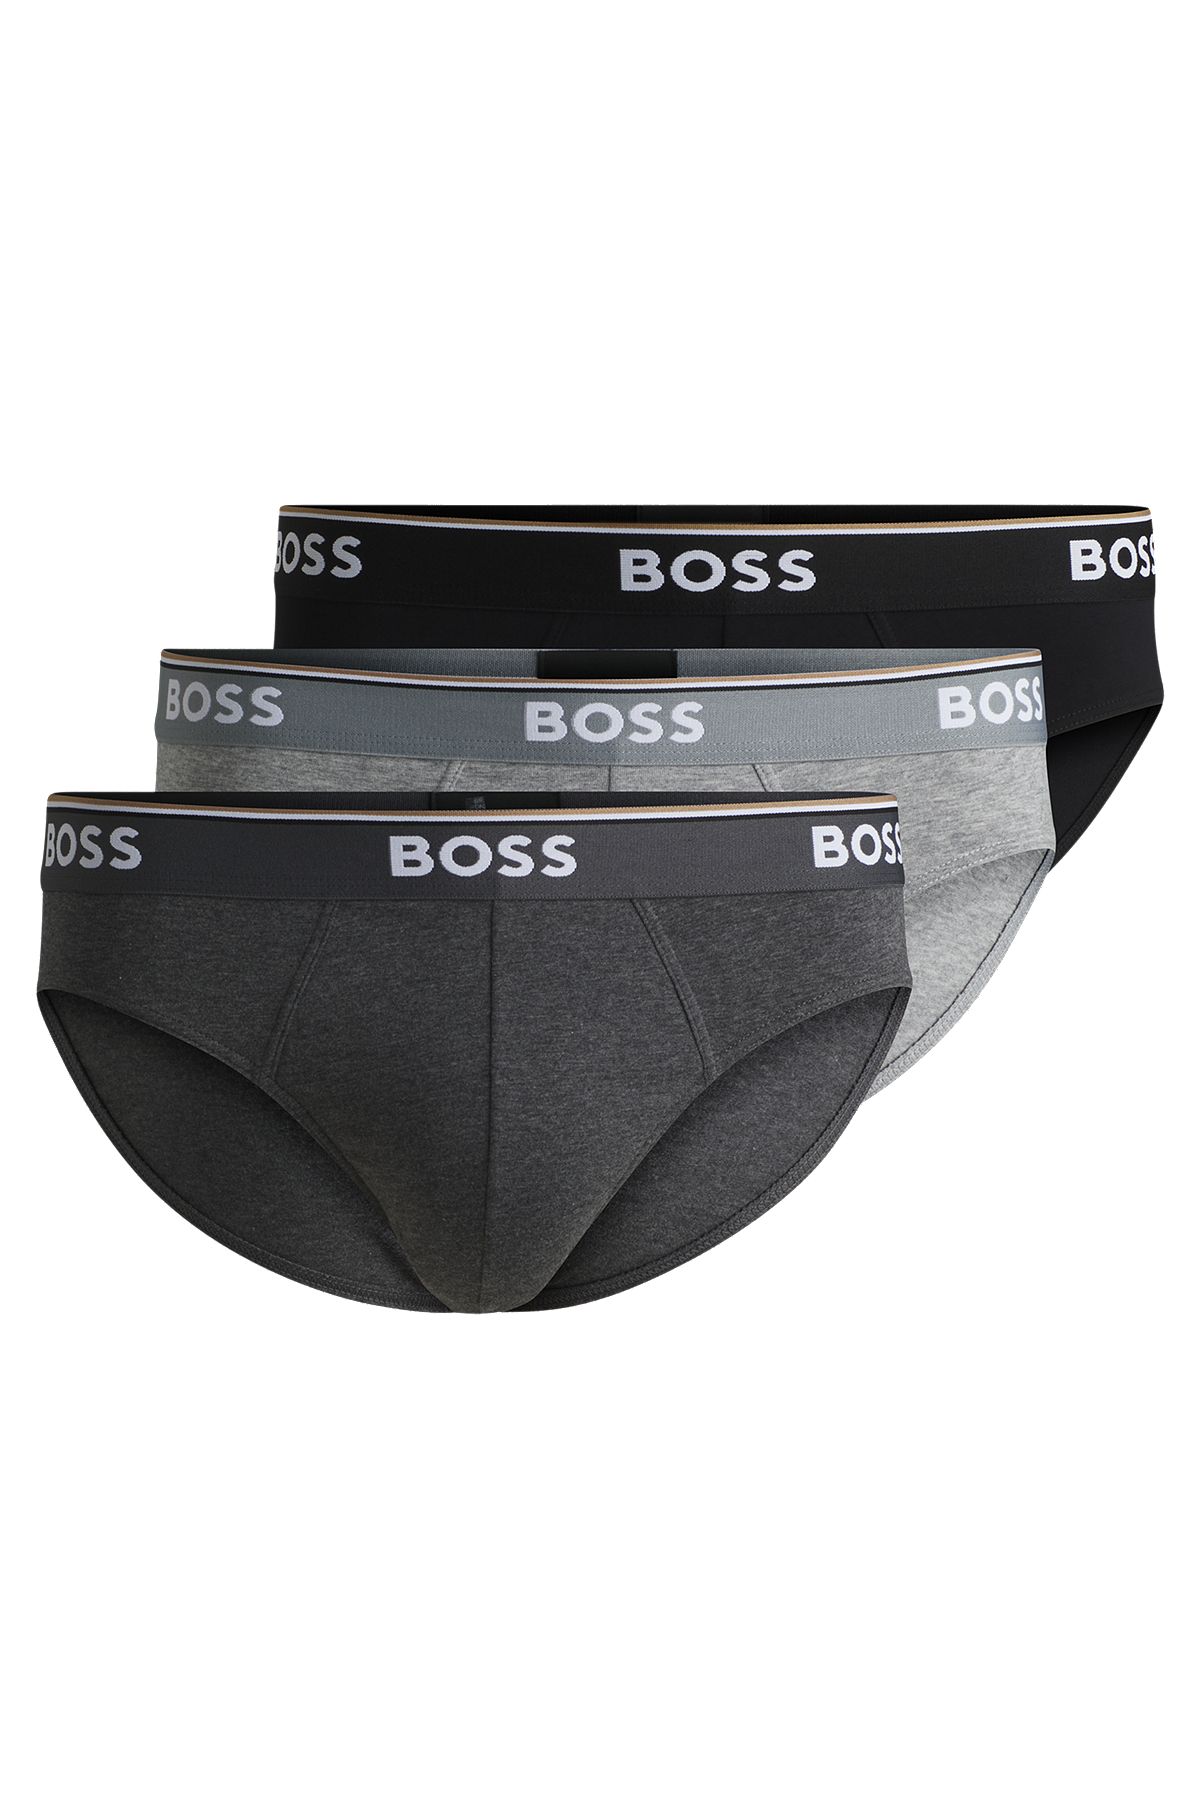 Boxer Briefs Modal Cotton Black/Grey Frank & Beans Underwear S M L XL XXL